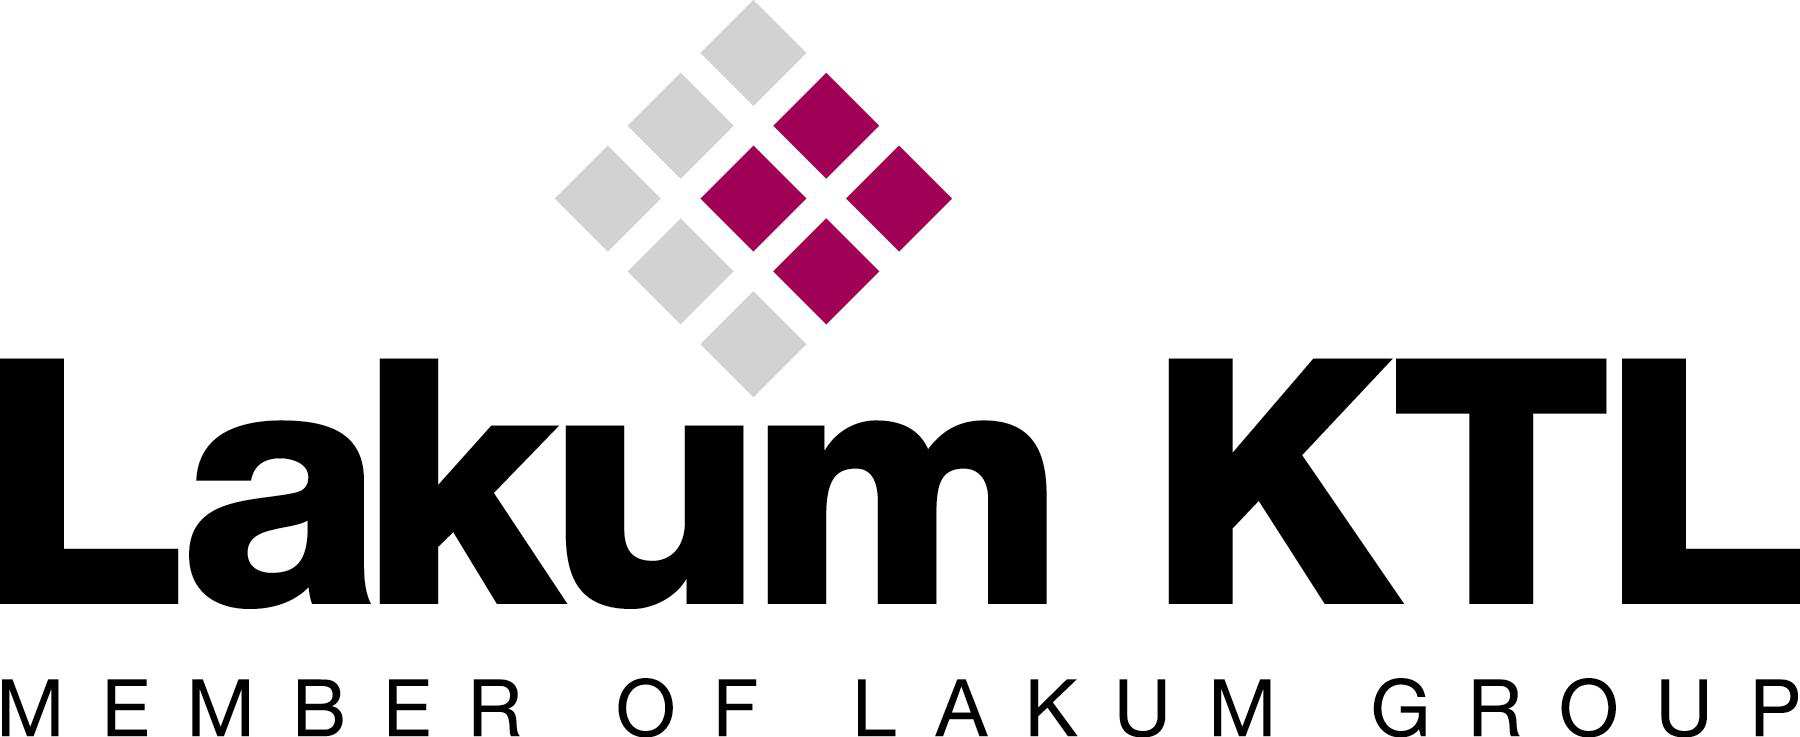 LAKUM-KTL, a.s.